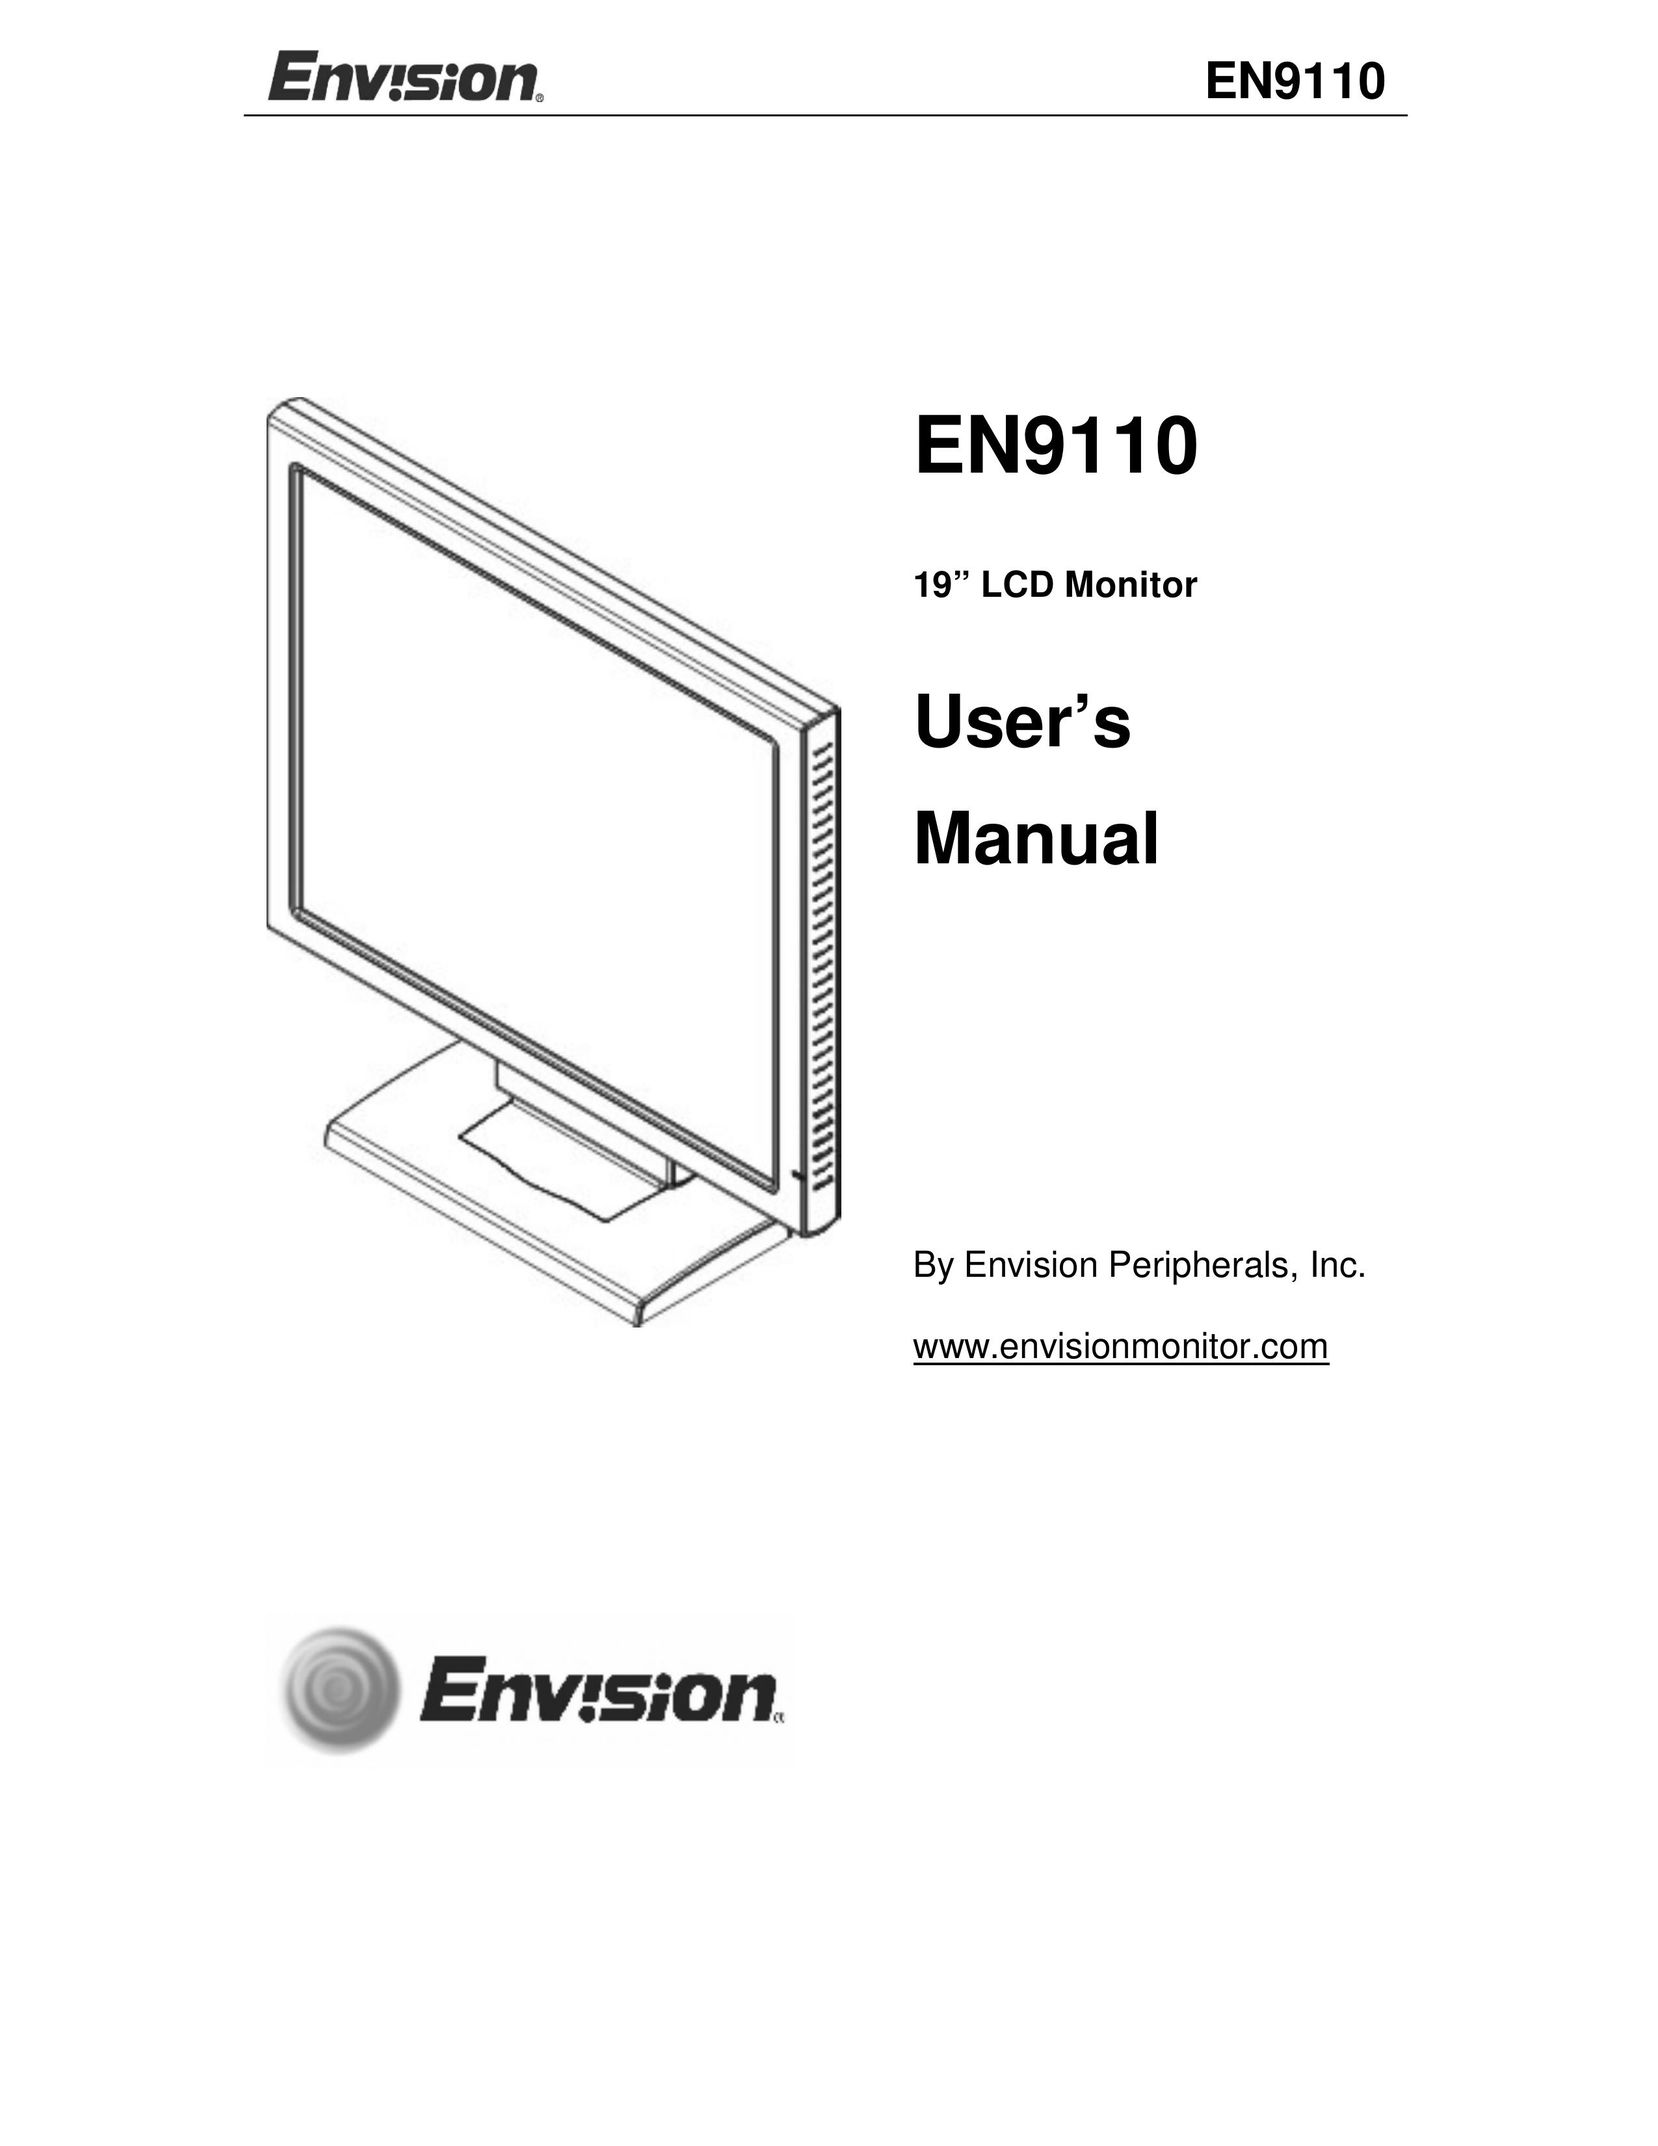 Envision Peripherals EN9110 Computer Monitor User Manual